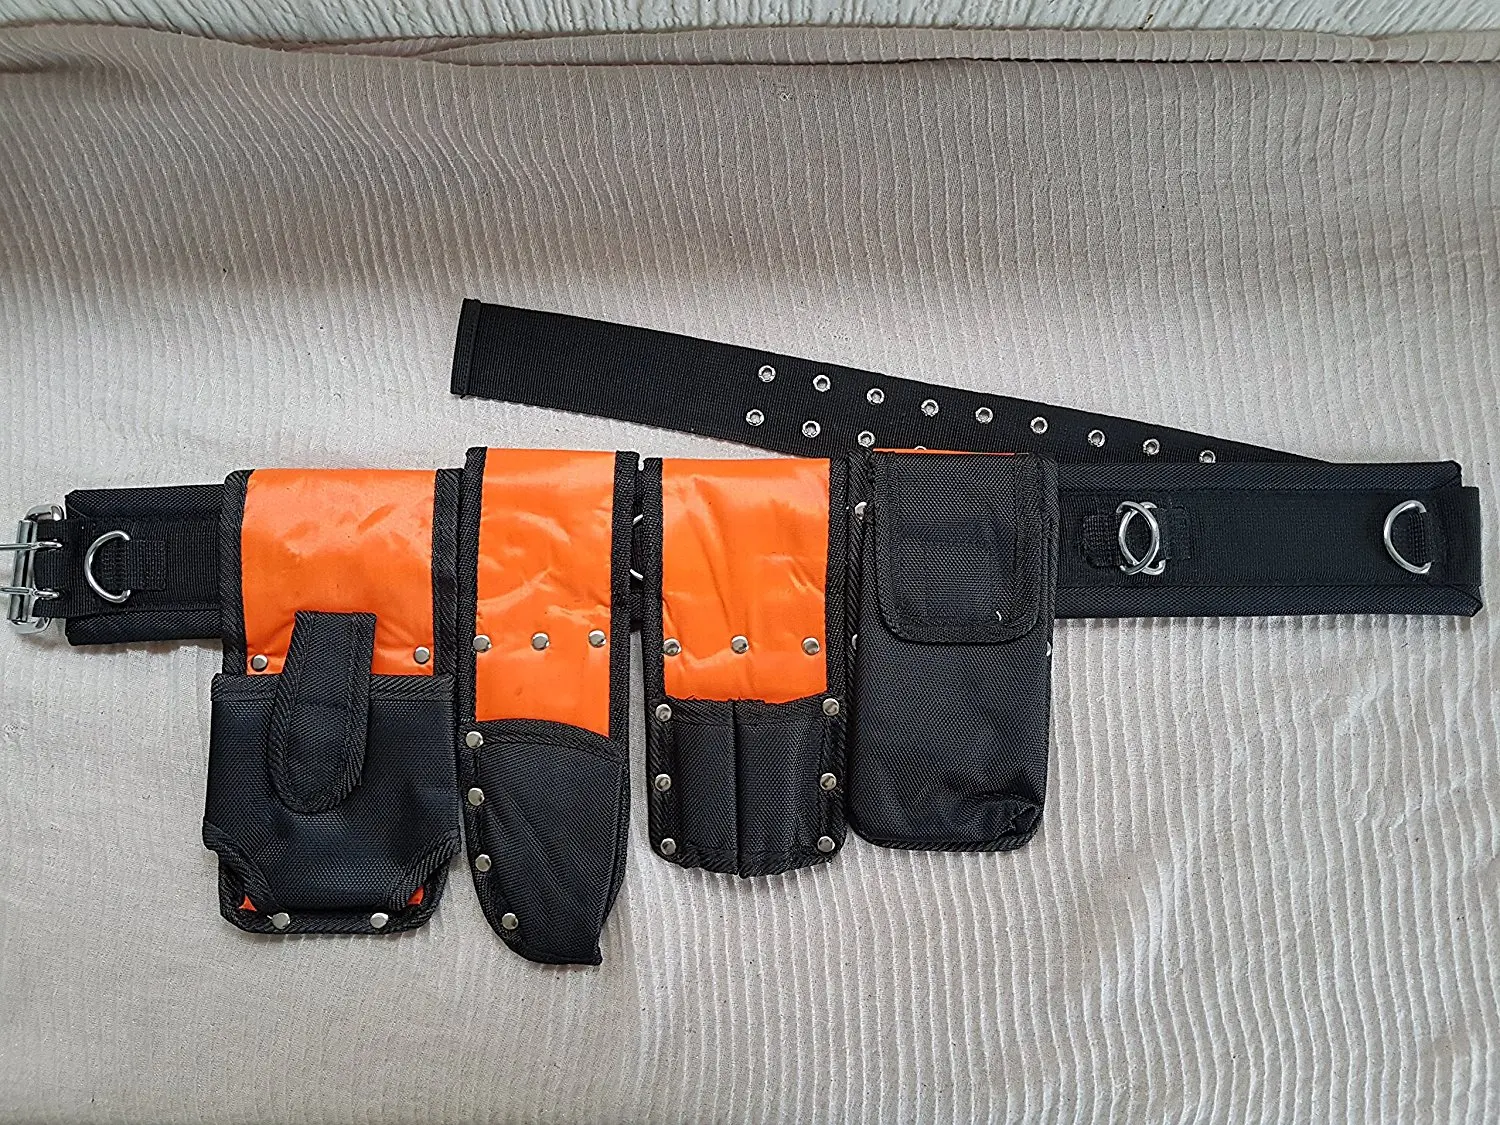 scaffolding tool belt kit